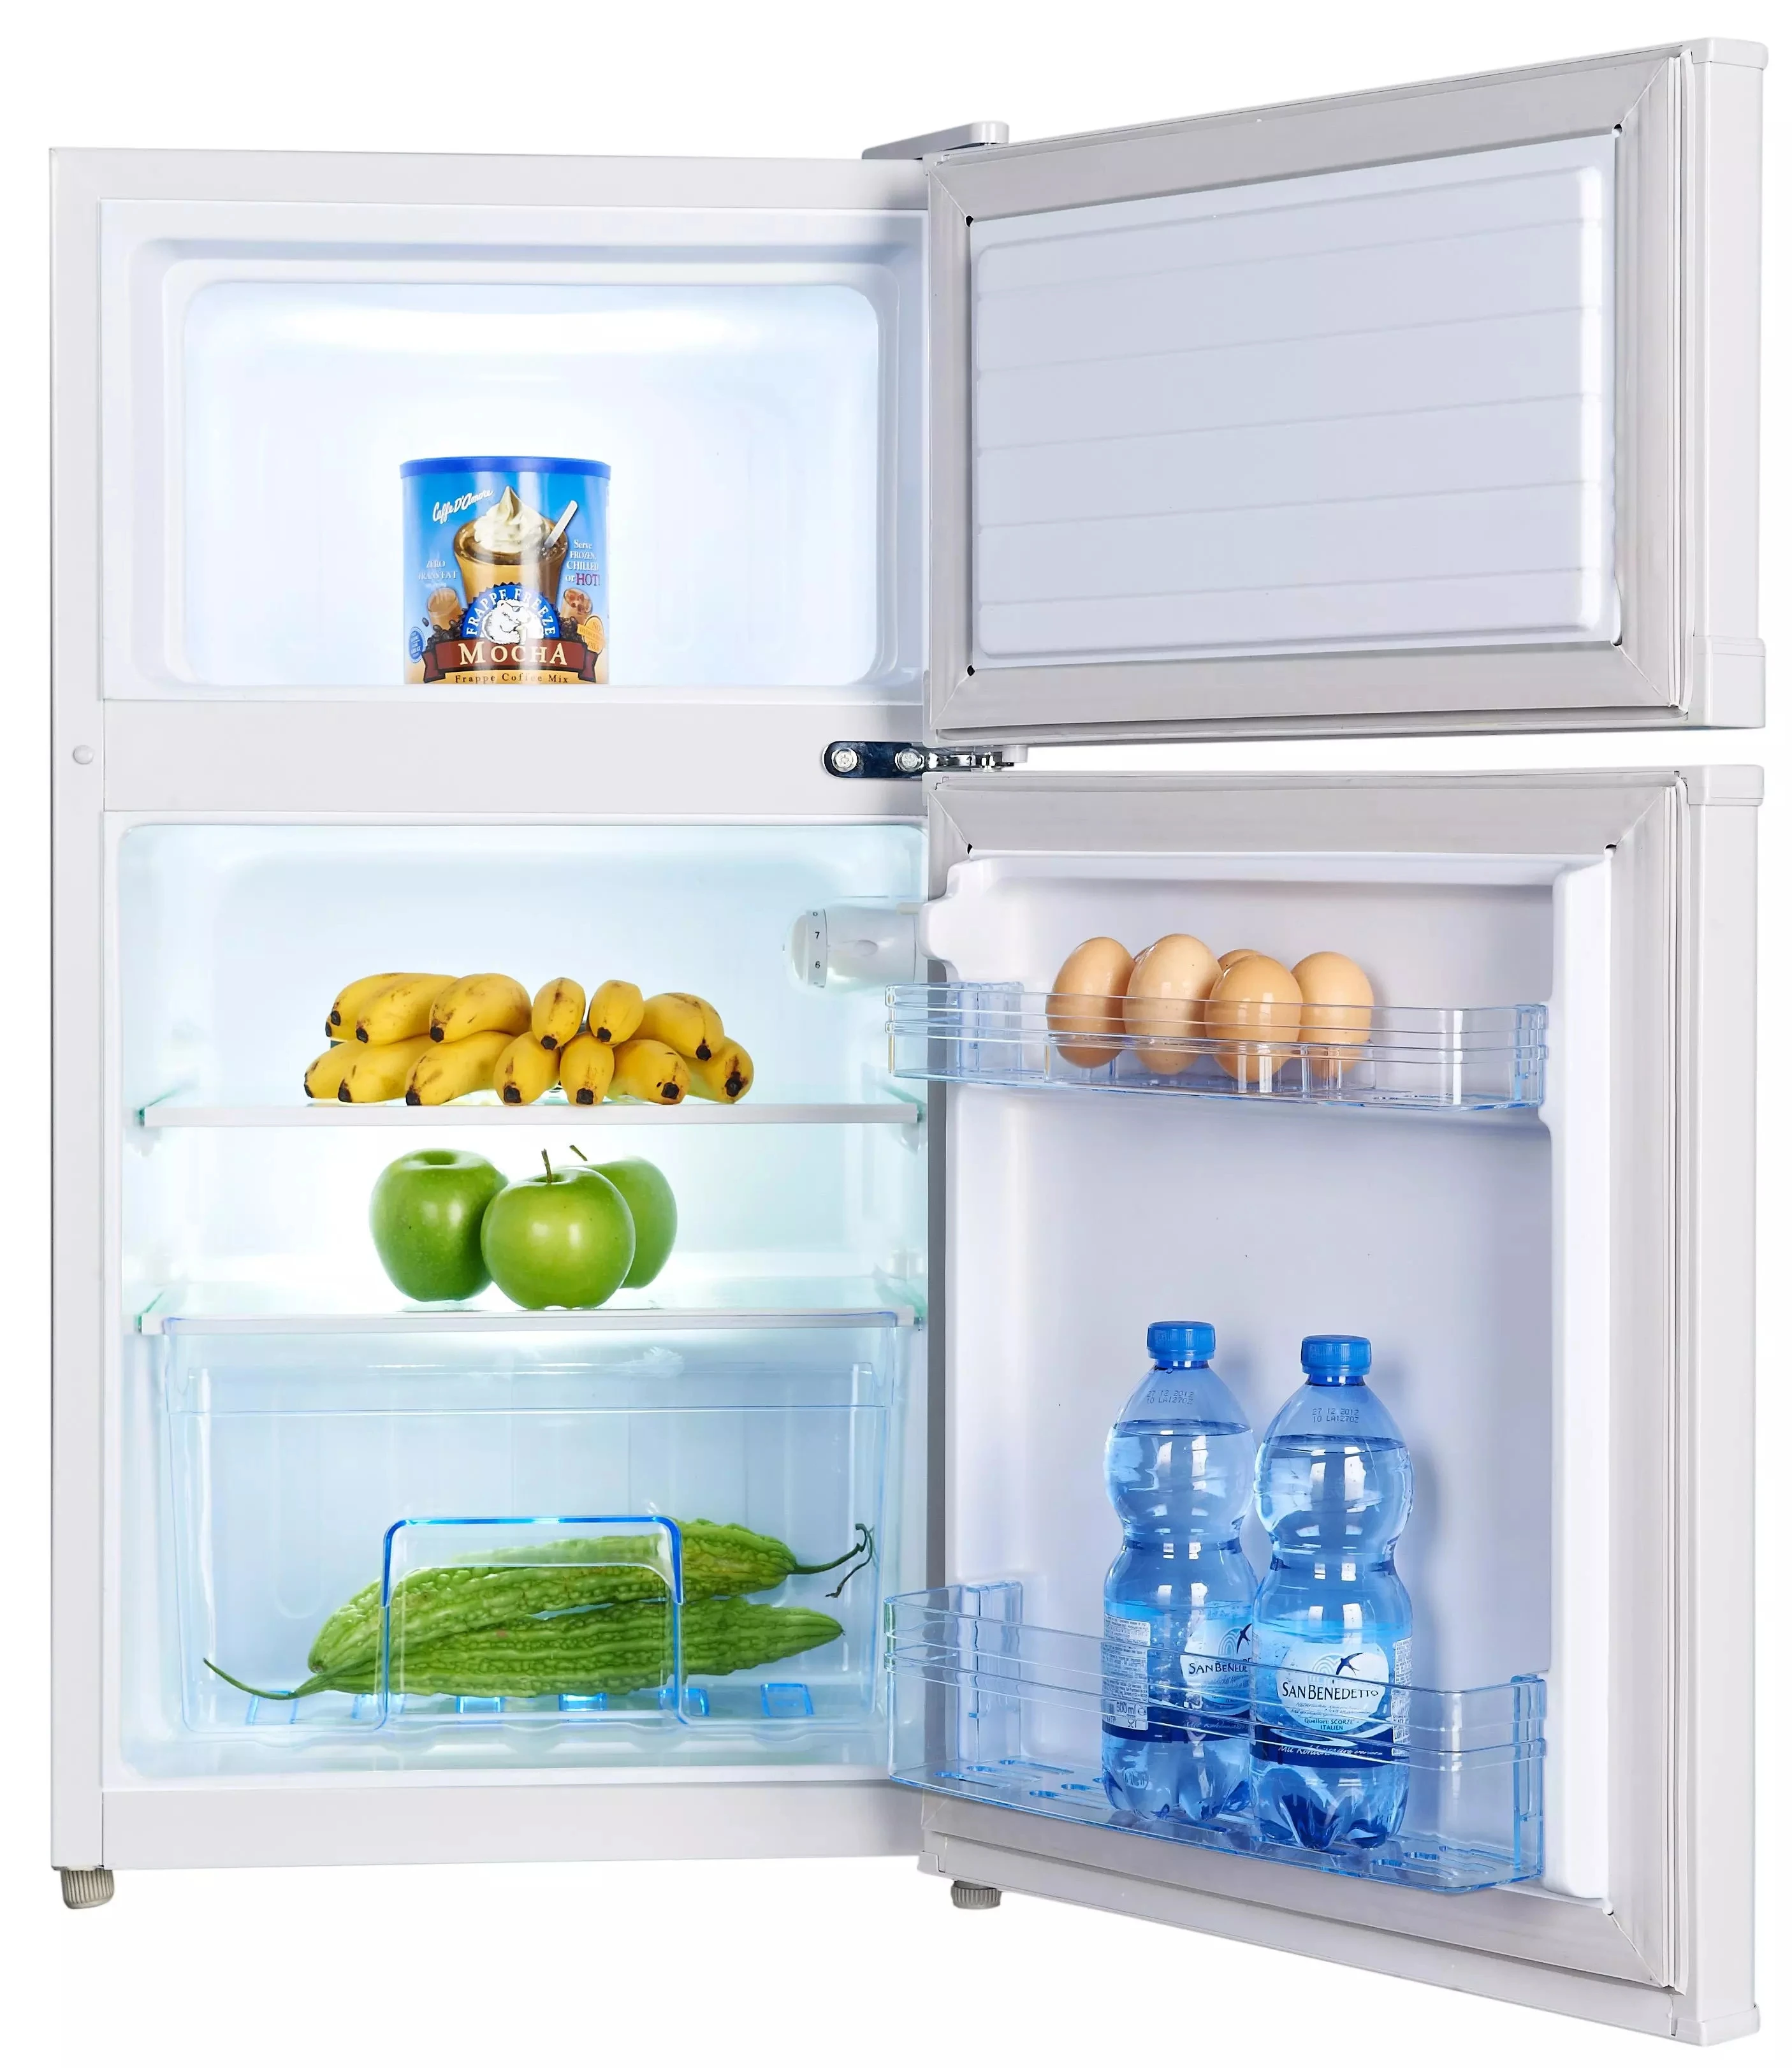 Мини холодильник с камерой. Shivaki SHRF-91ds. Холодильник Шиваки двухкамерный. Shivaki холодильник маленький двухкамерный. Холодильник Shivaki маленький с морозилкой.